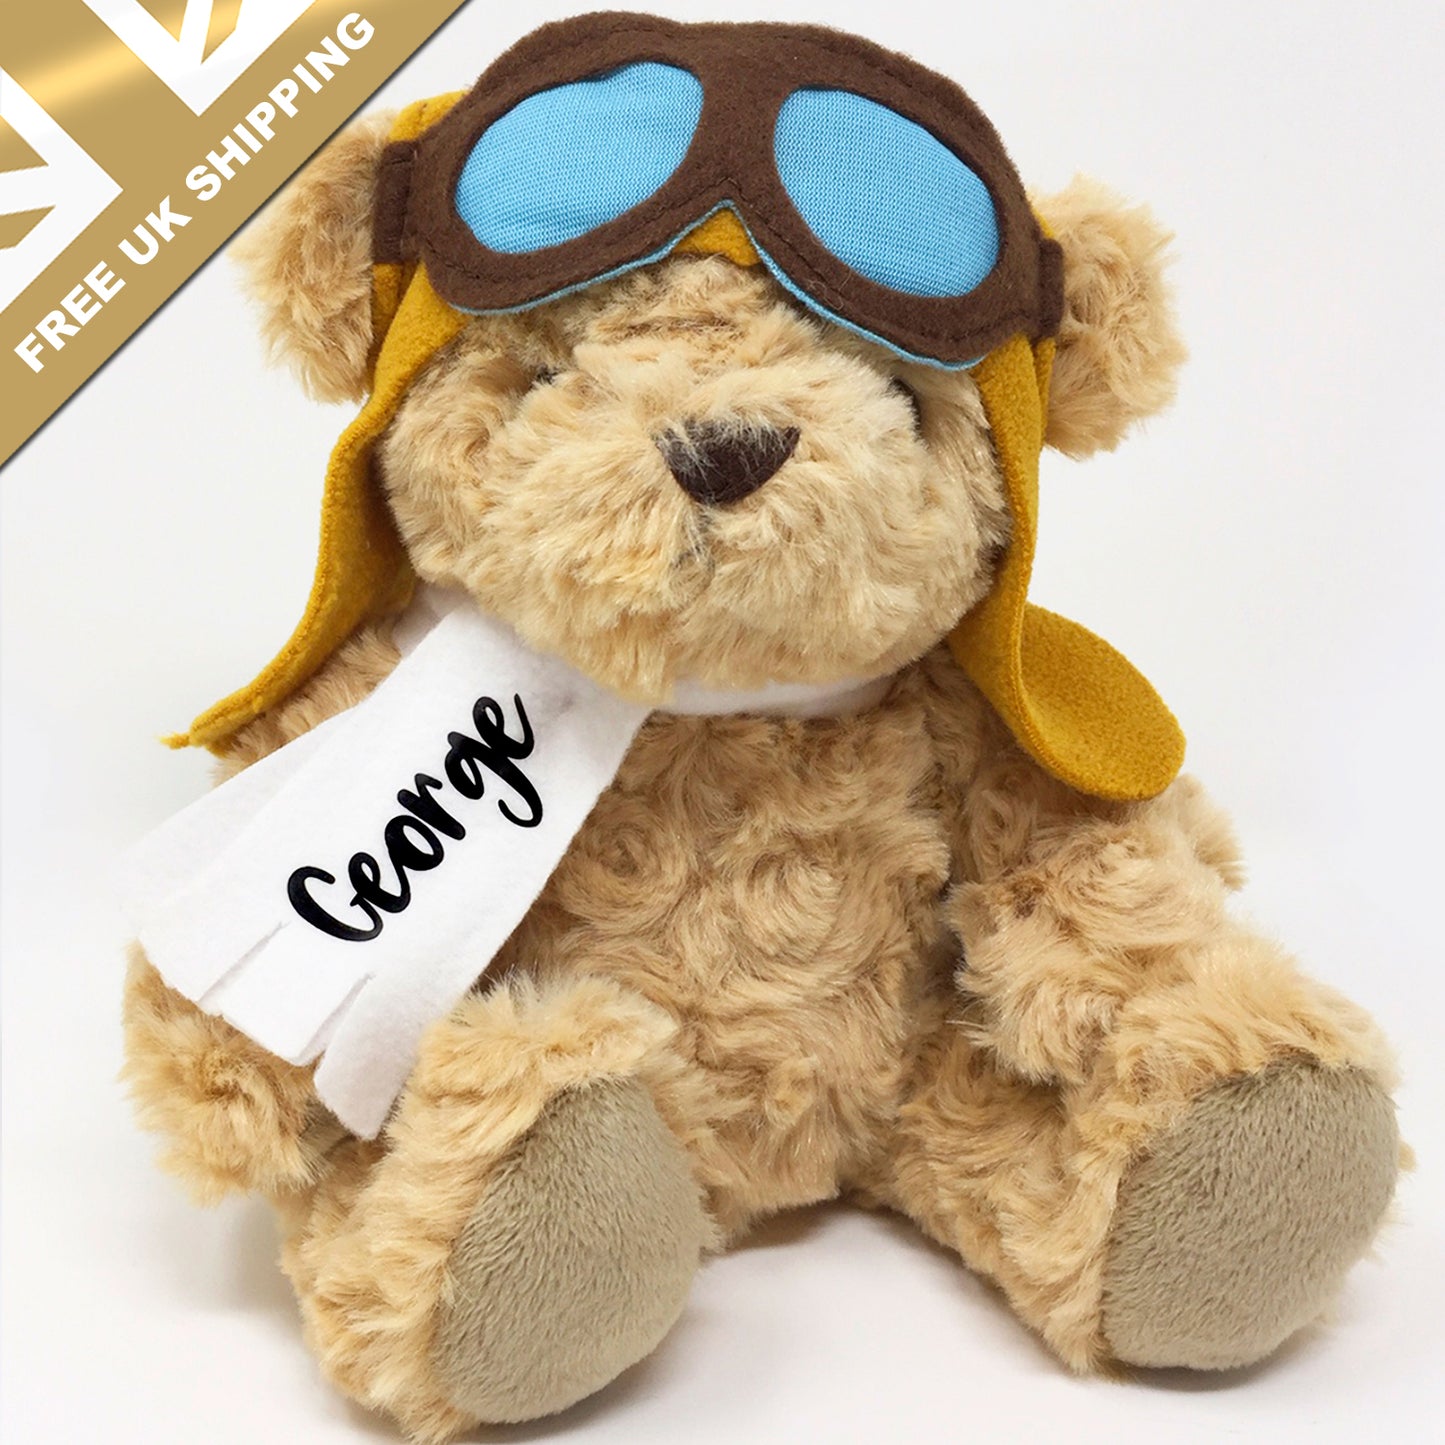 Personalised Pilot Teddy Bear - FREE UK SHIPPING